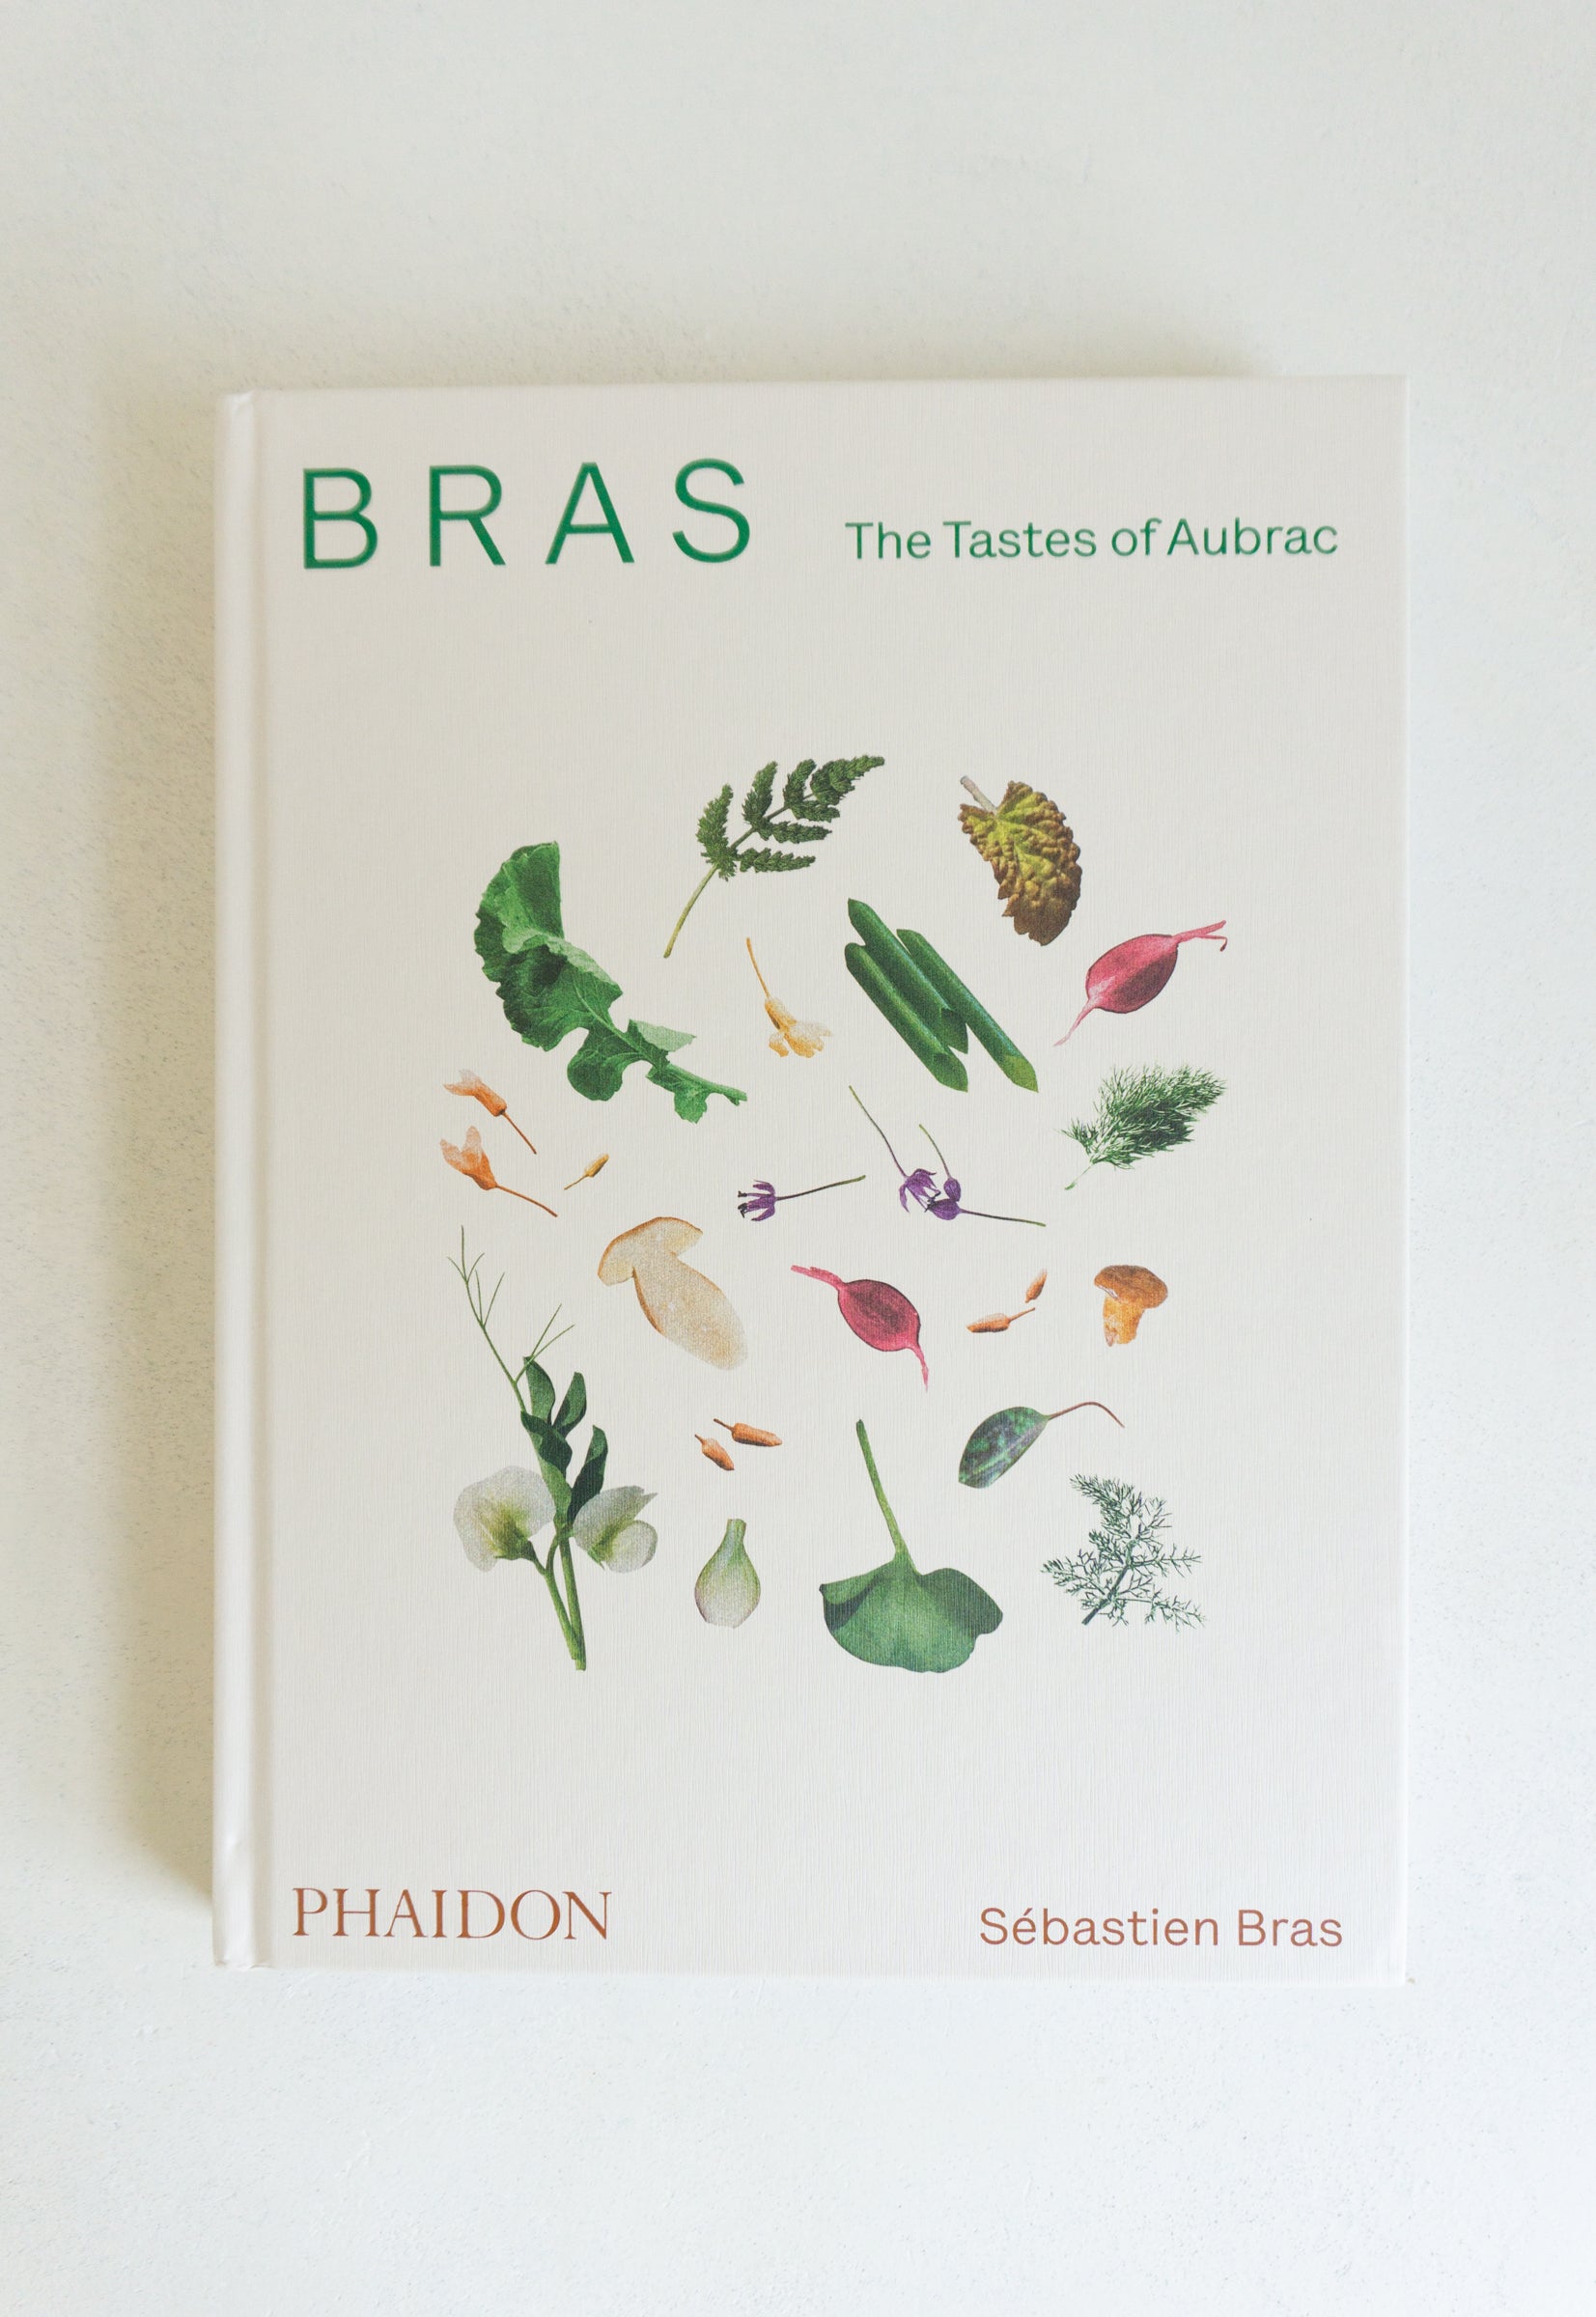 Bras, The Tastes of Aubrac